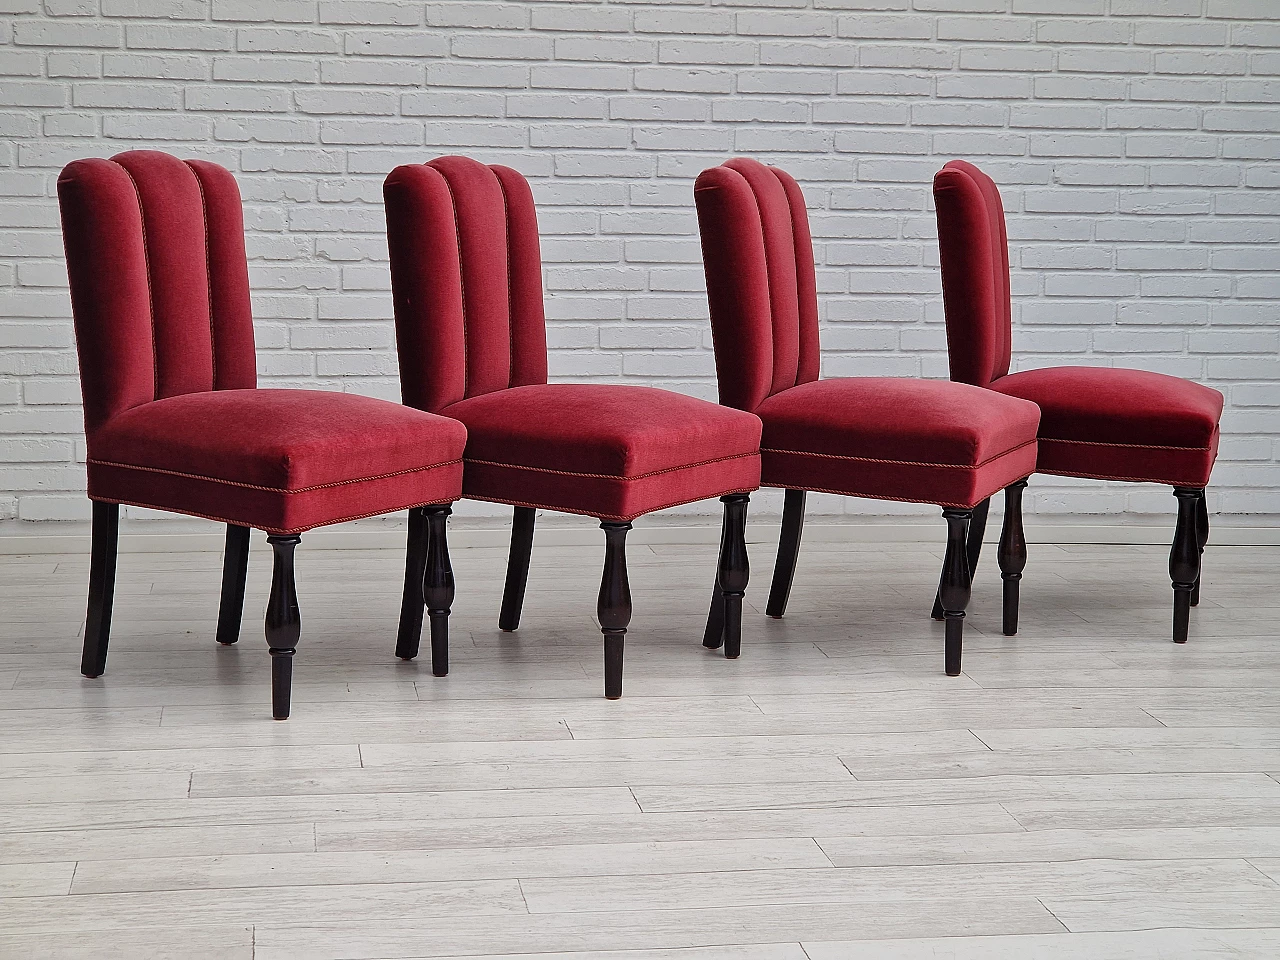 4 Danish oak chairs with cherry red velvet upholstery, 1950s 1